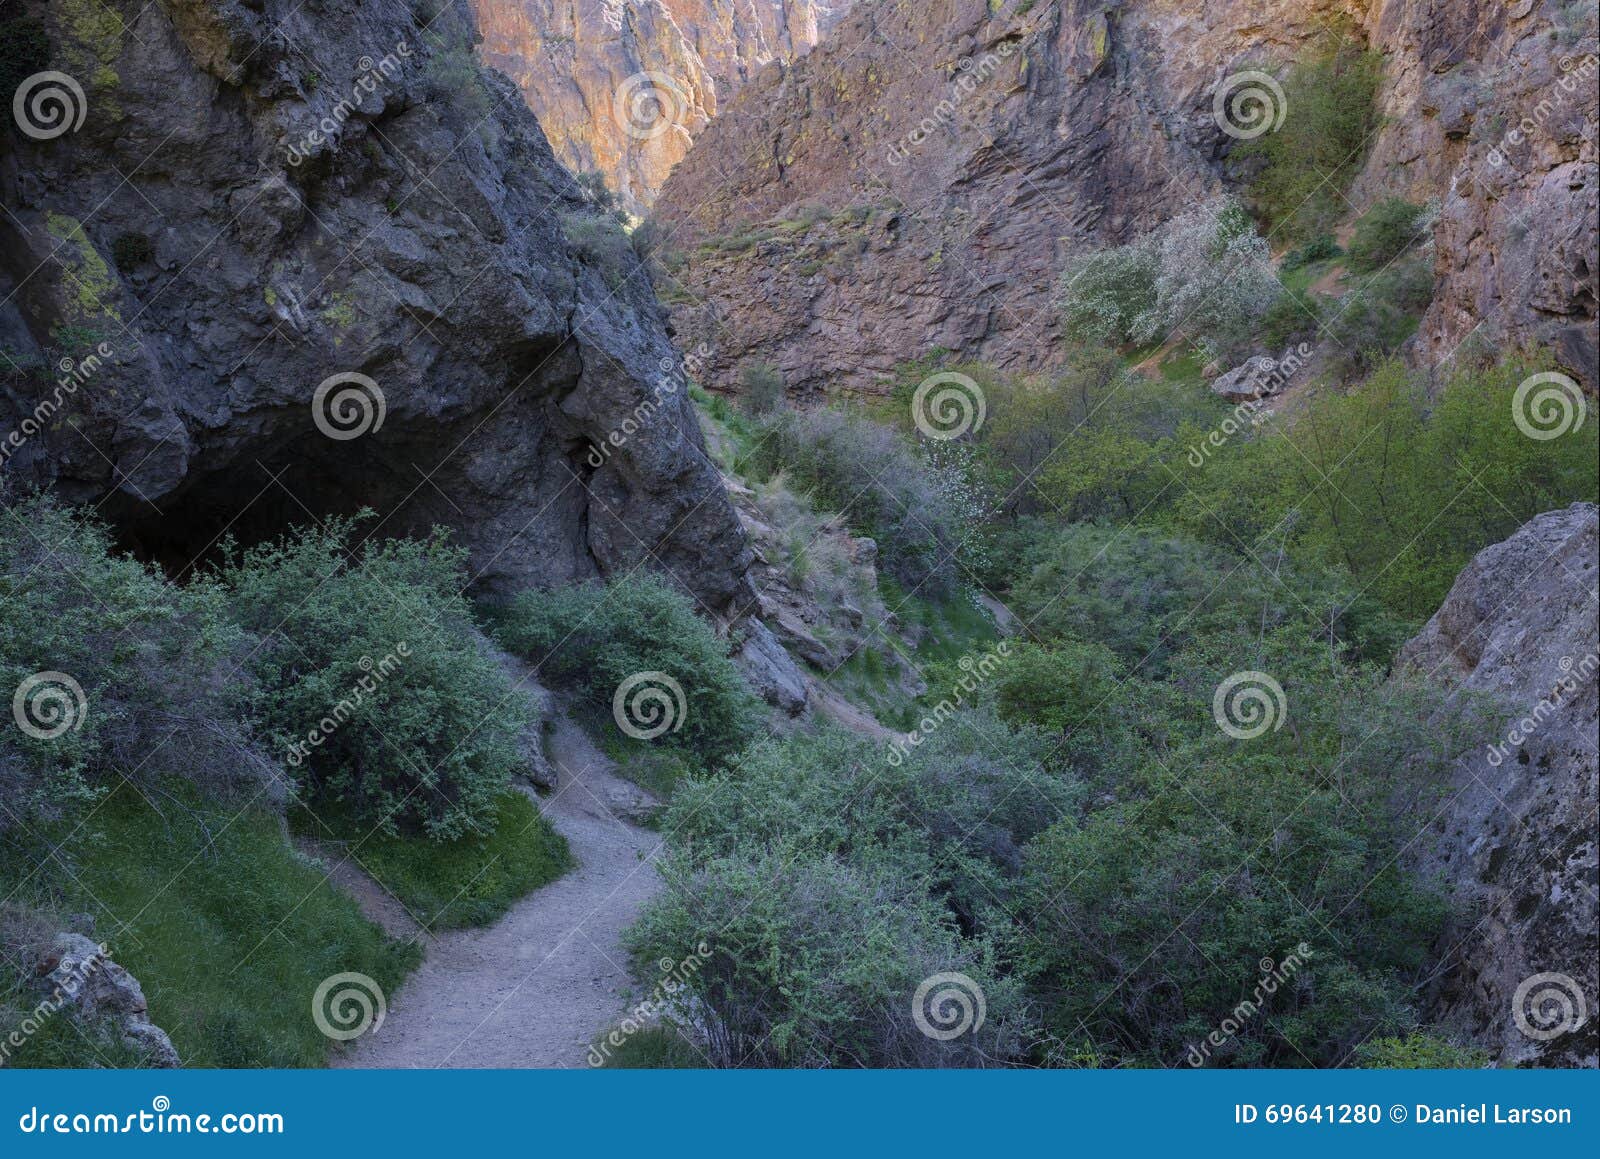 Jump Creek Canyon stock photo. Image of creek, idaho - 69641280